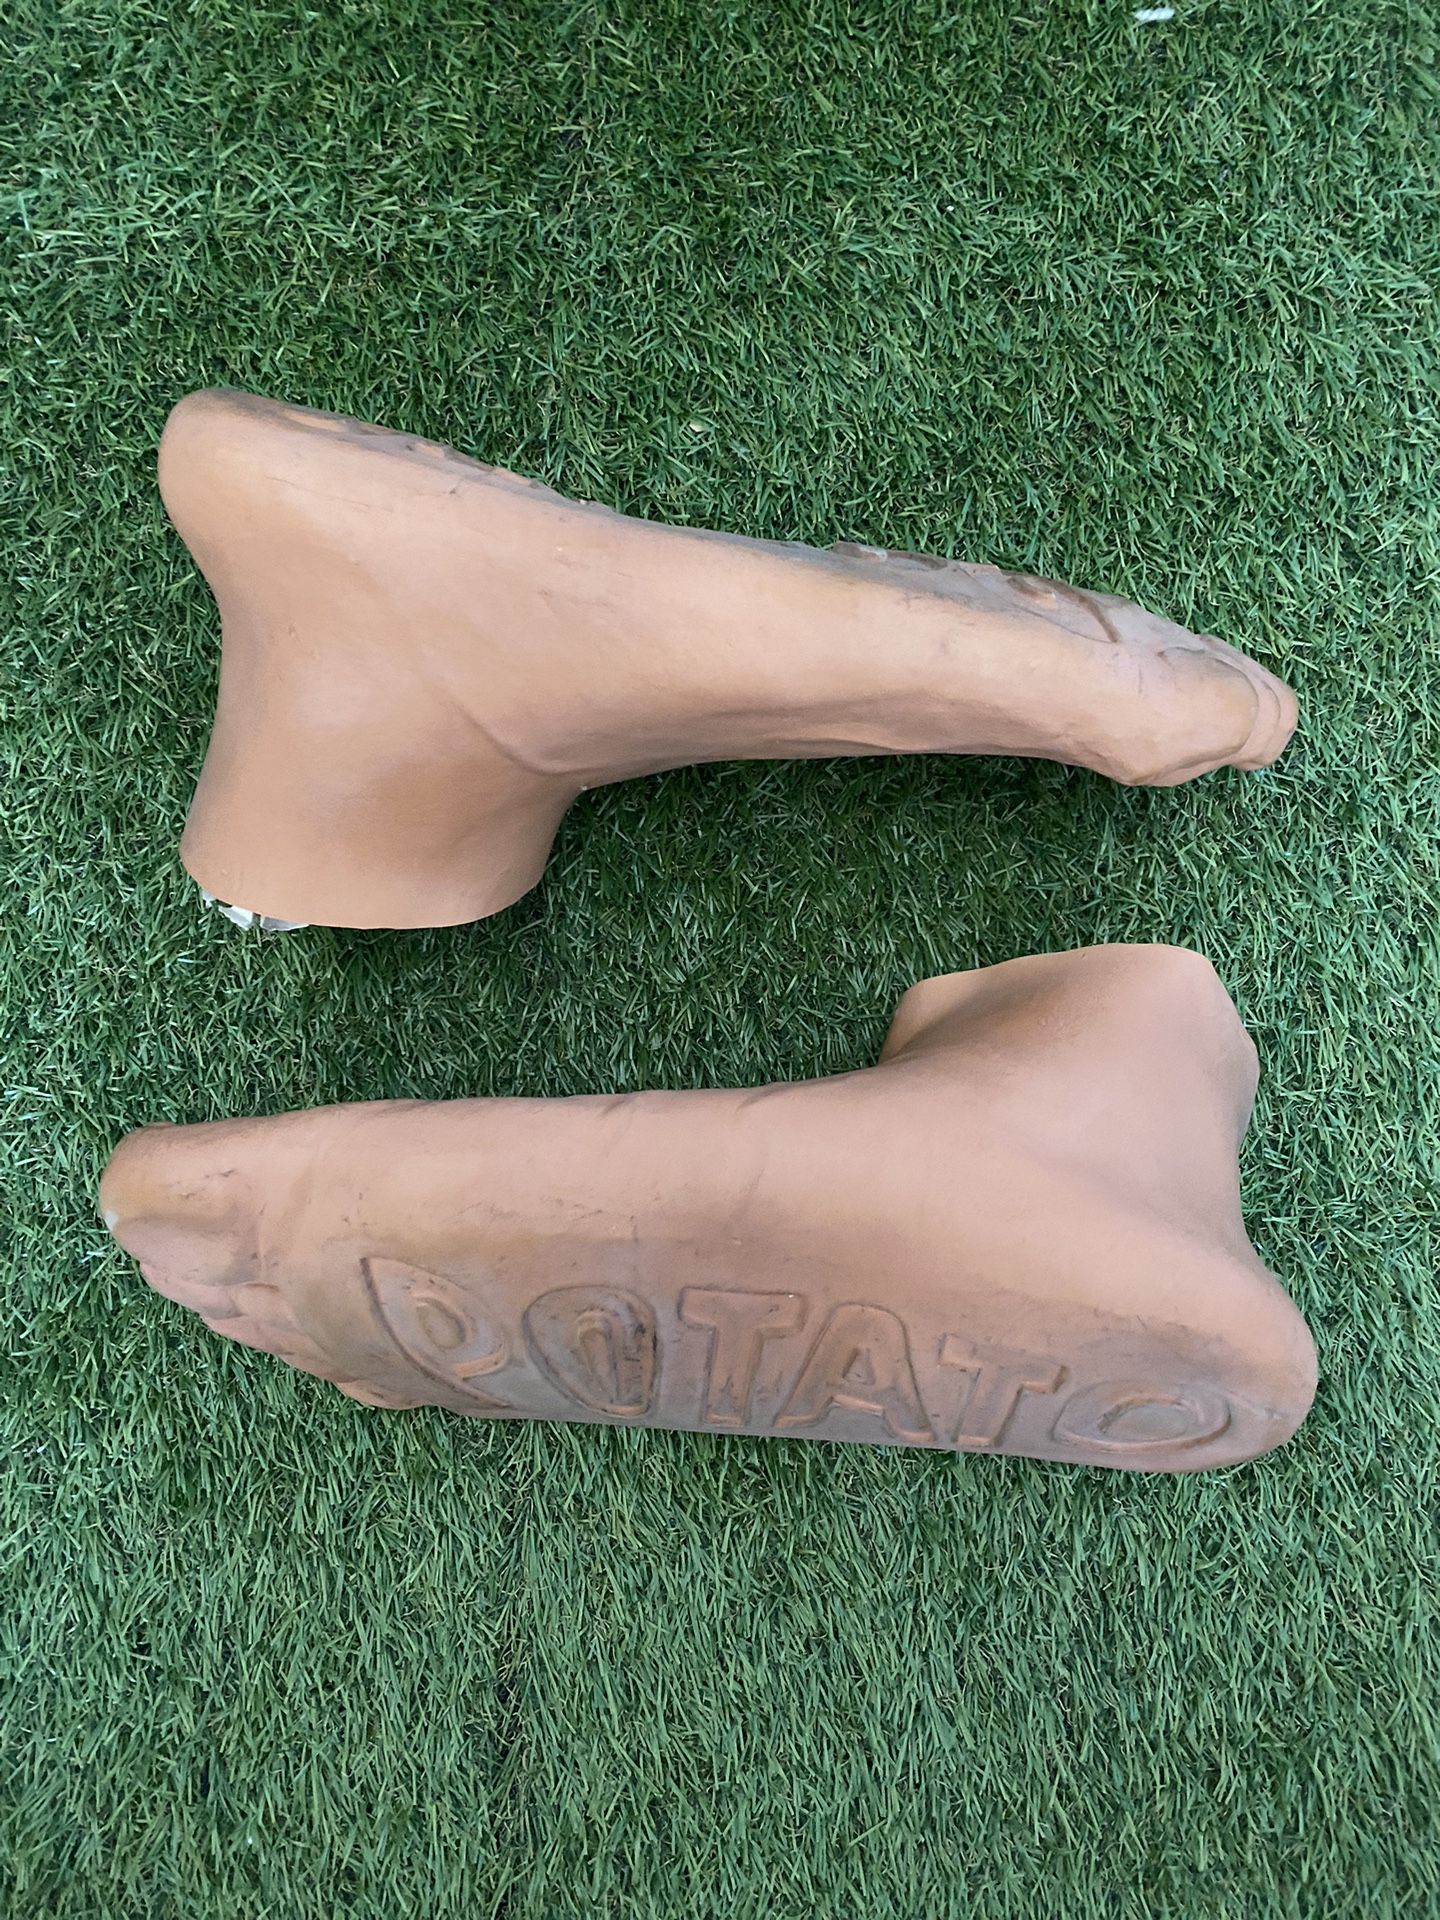 imran potato caveman slippers/shoes for Sale in Phoenix, AZ - OfferUp